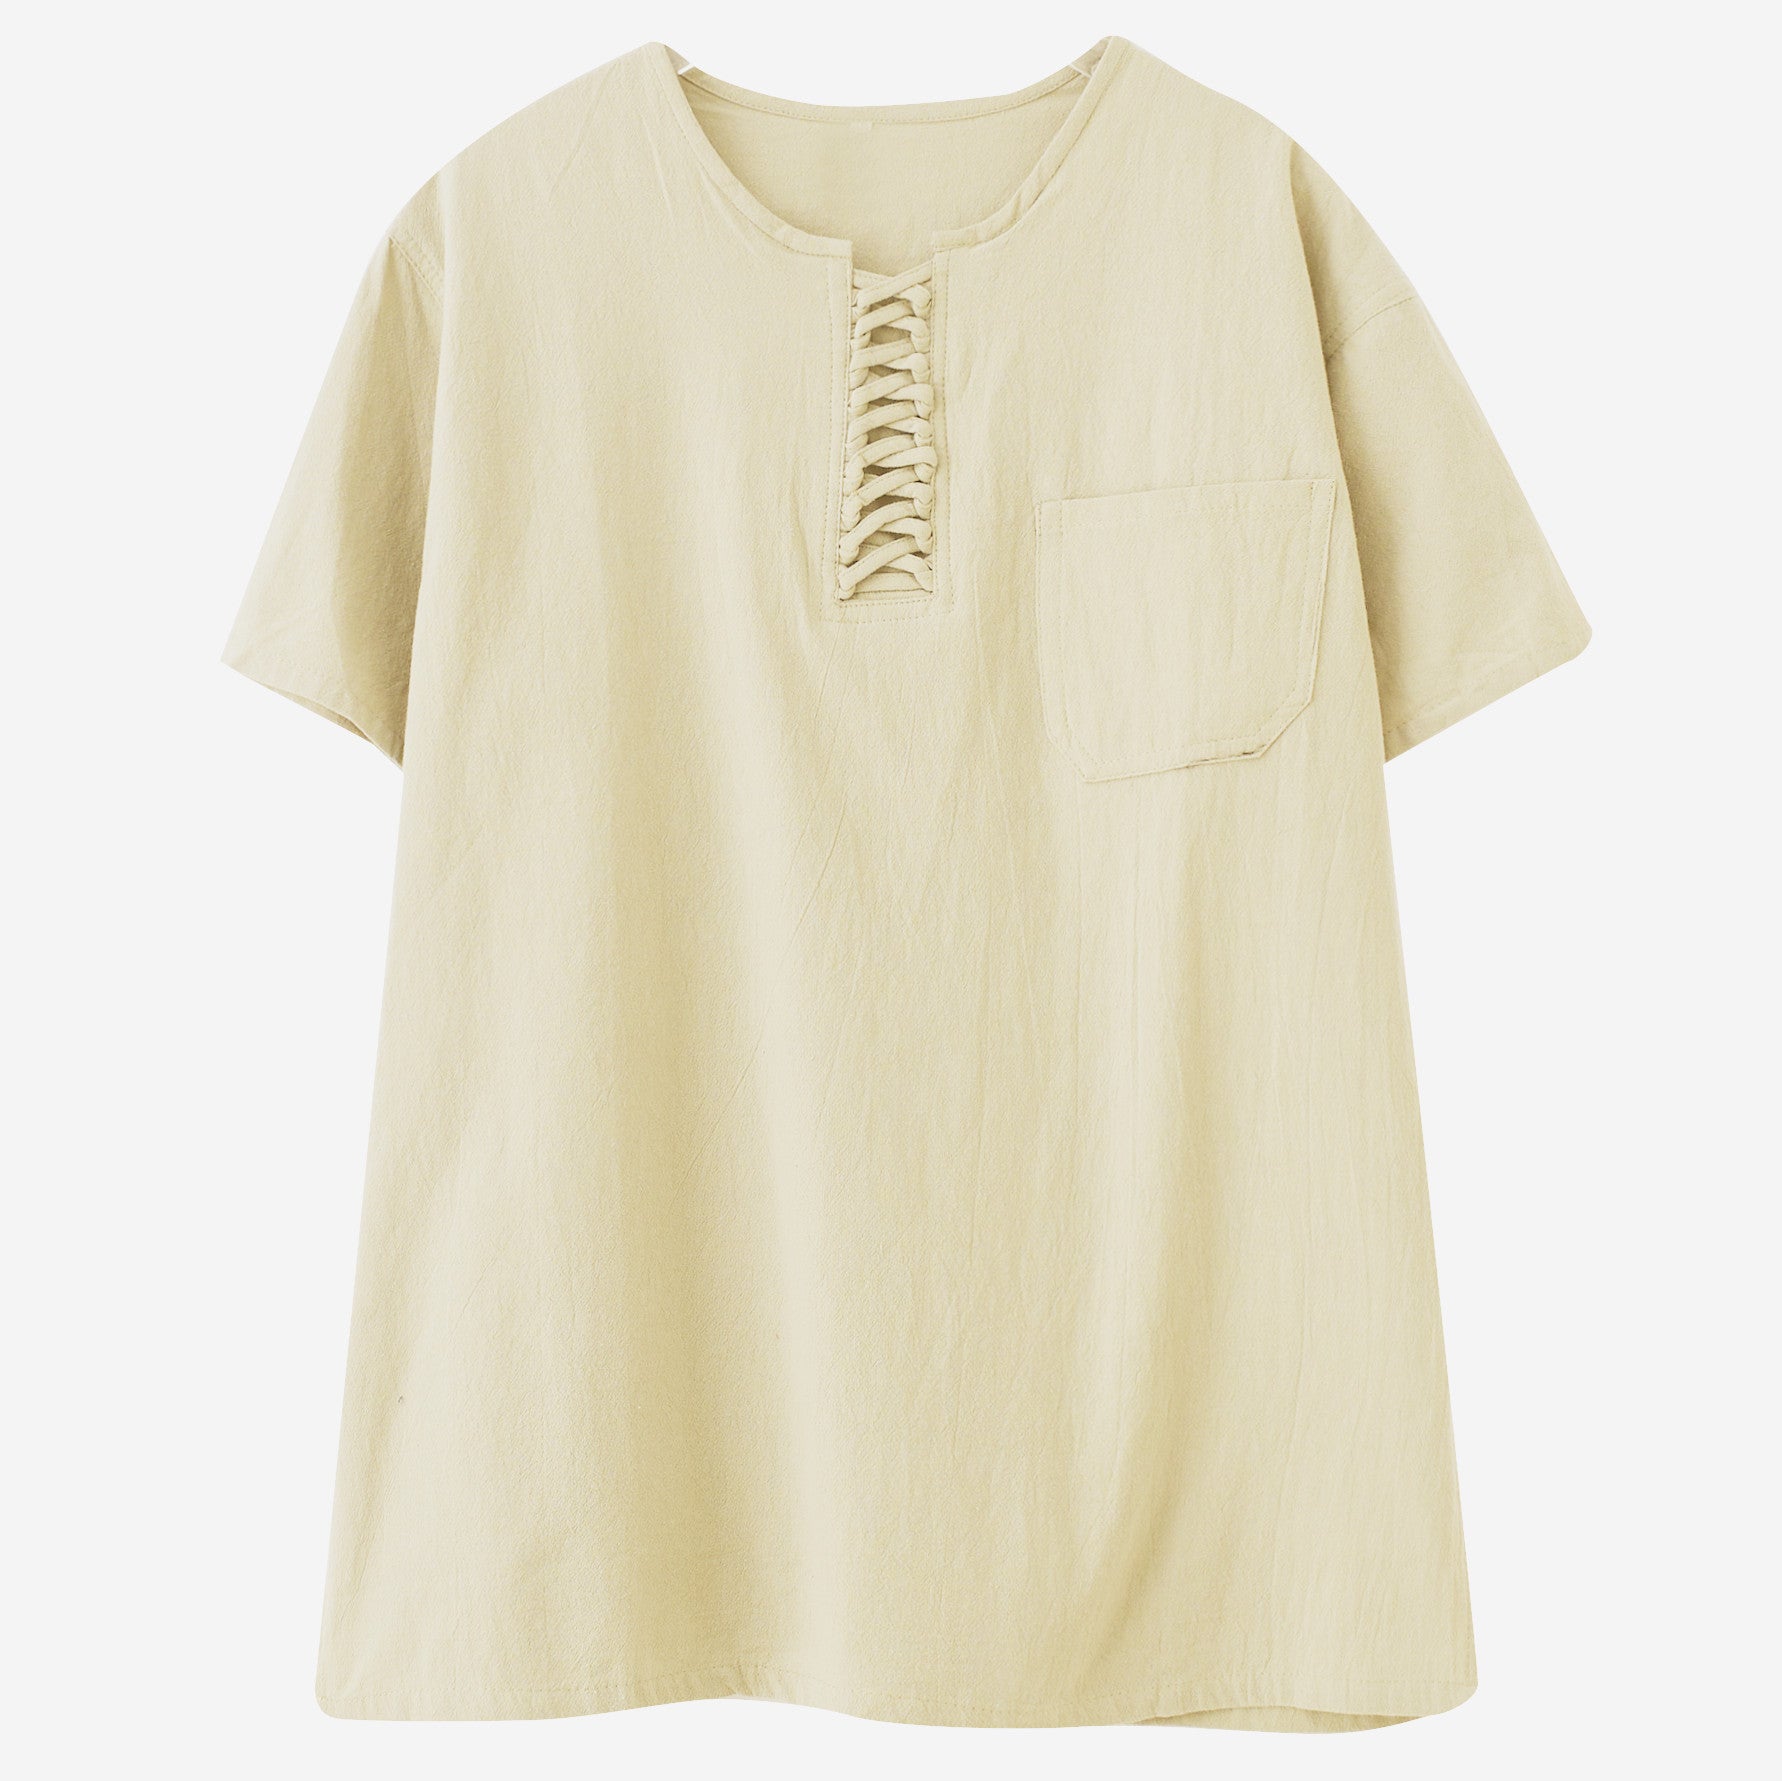 Men Cotton Linen T shirt in Hanfu style 070621b